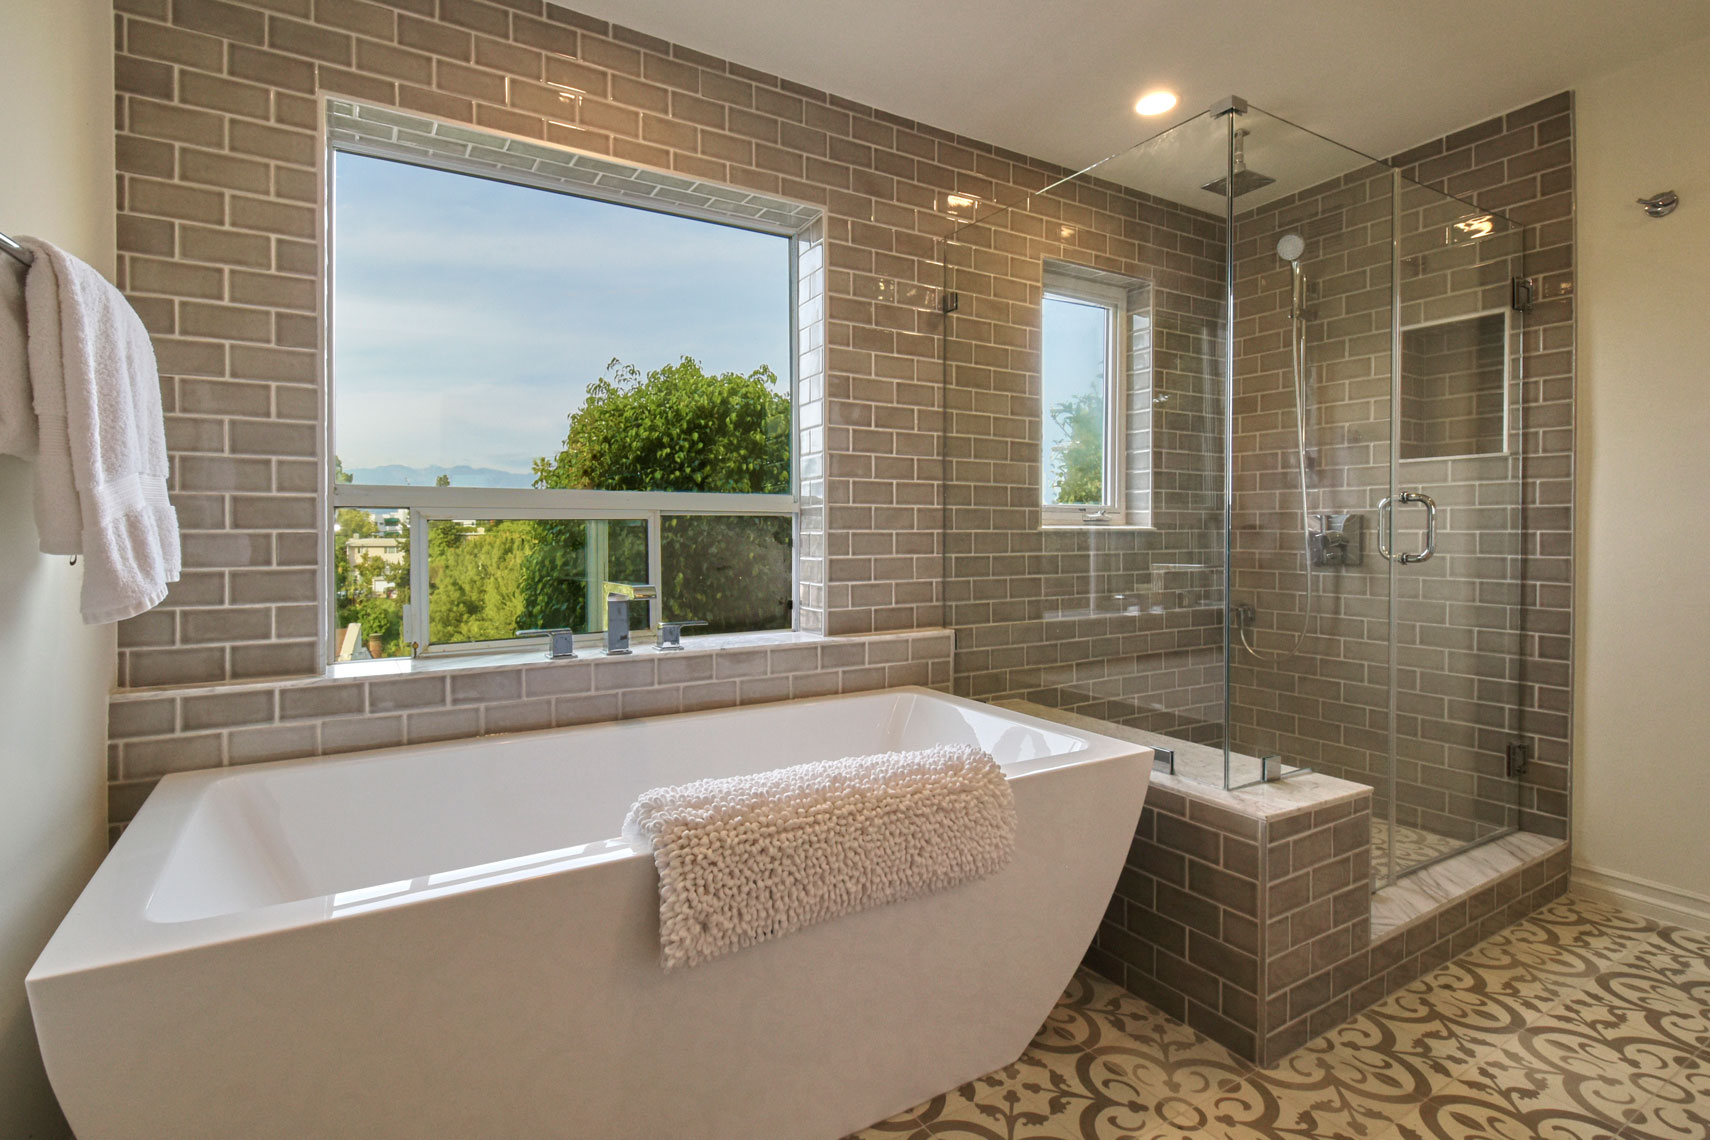 Beautiful-interior-design-photography-of-bathroom-detail-with-contemporary-frestanding-bathtub-Joe-Atlas-architectural-photographer-Los-Angeles.